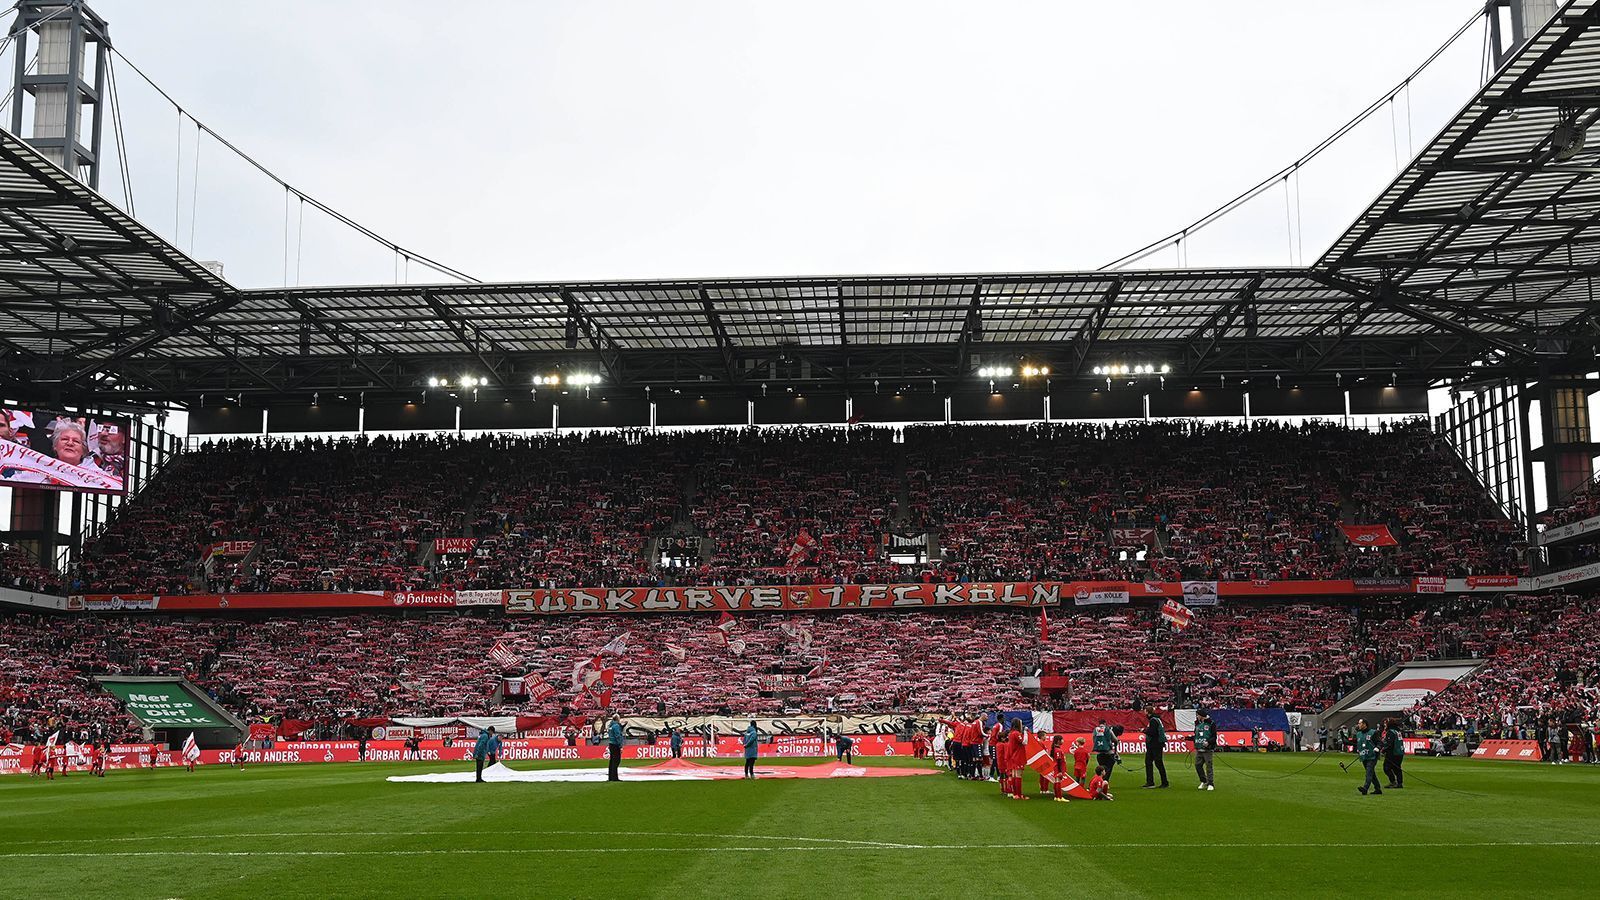 
                <strong>1. FC Köln</strong><br>
                &#x2022; Aktueller Name: RheinEnergieStadion<br>&#x2022; Eröffnung des Stadions: Januar 2004<br>&#x2022; Altes Stadion: Müngersdorfer Stadion (an gleicher Stelle)<br>
              